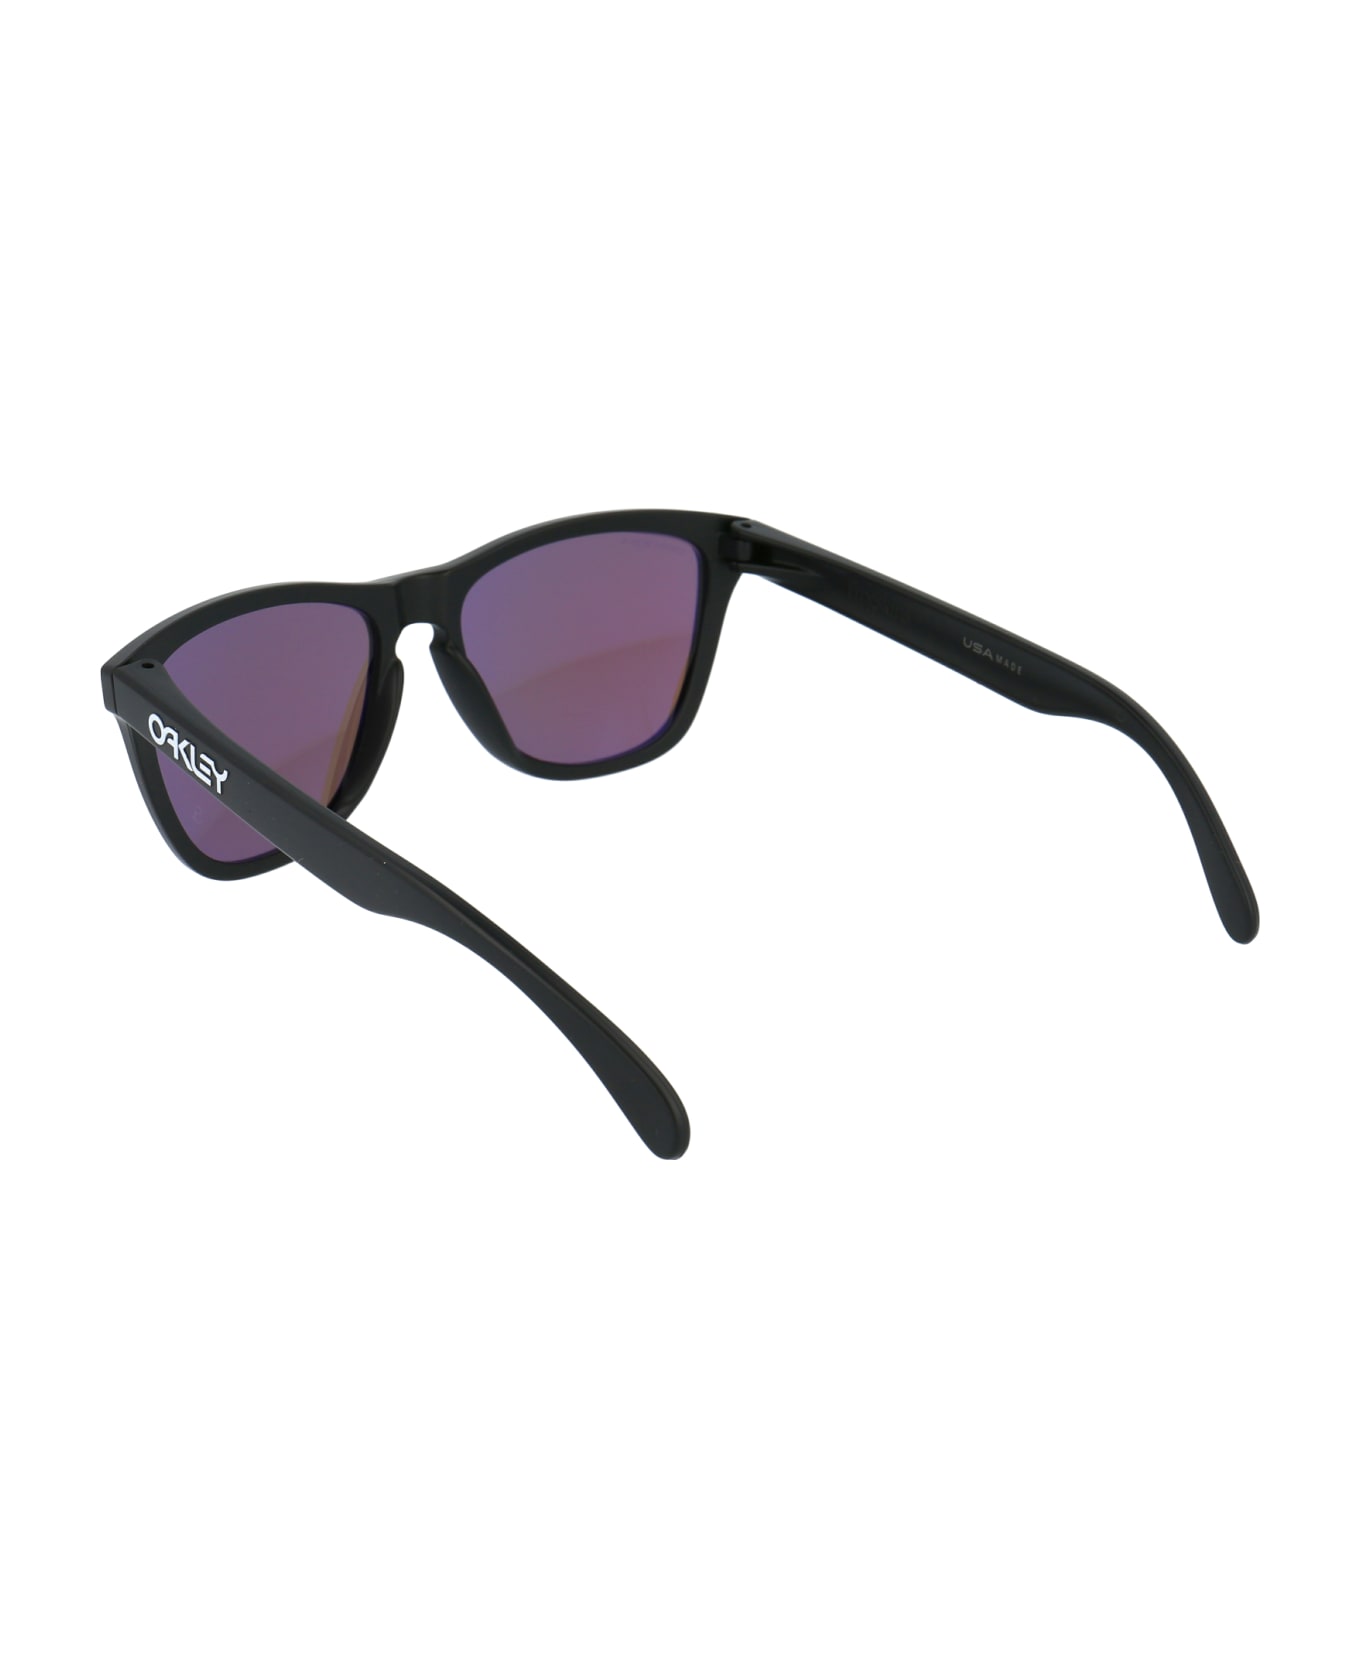 Oakley Frogskins Sunglasses - 9013H6 MATTE BLACK サングラス